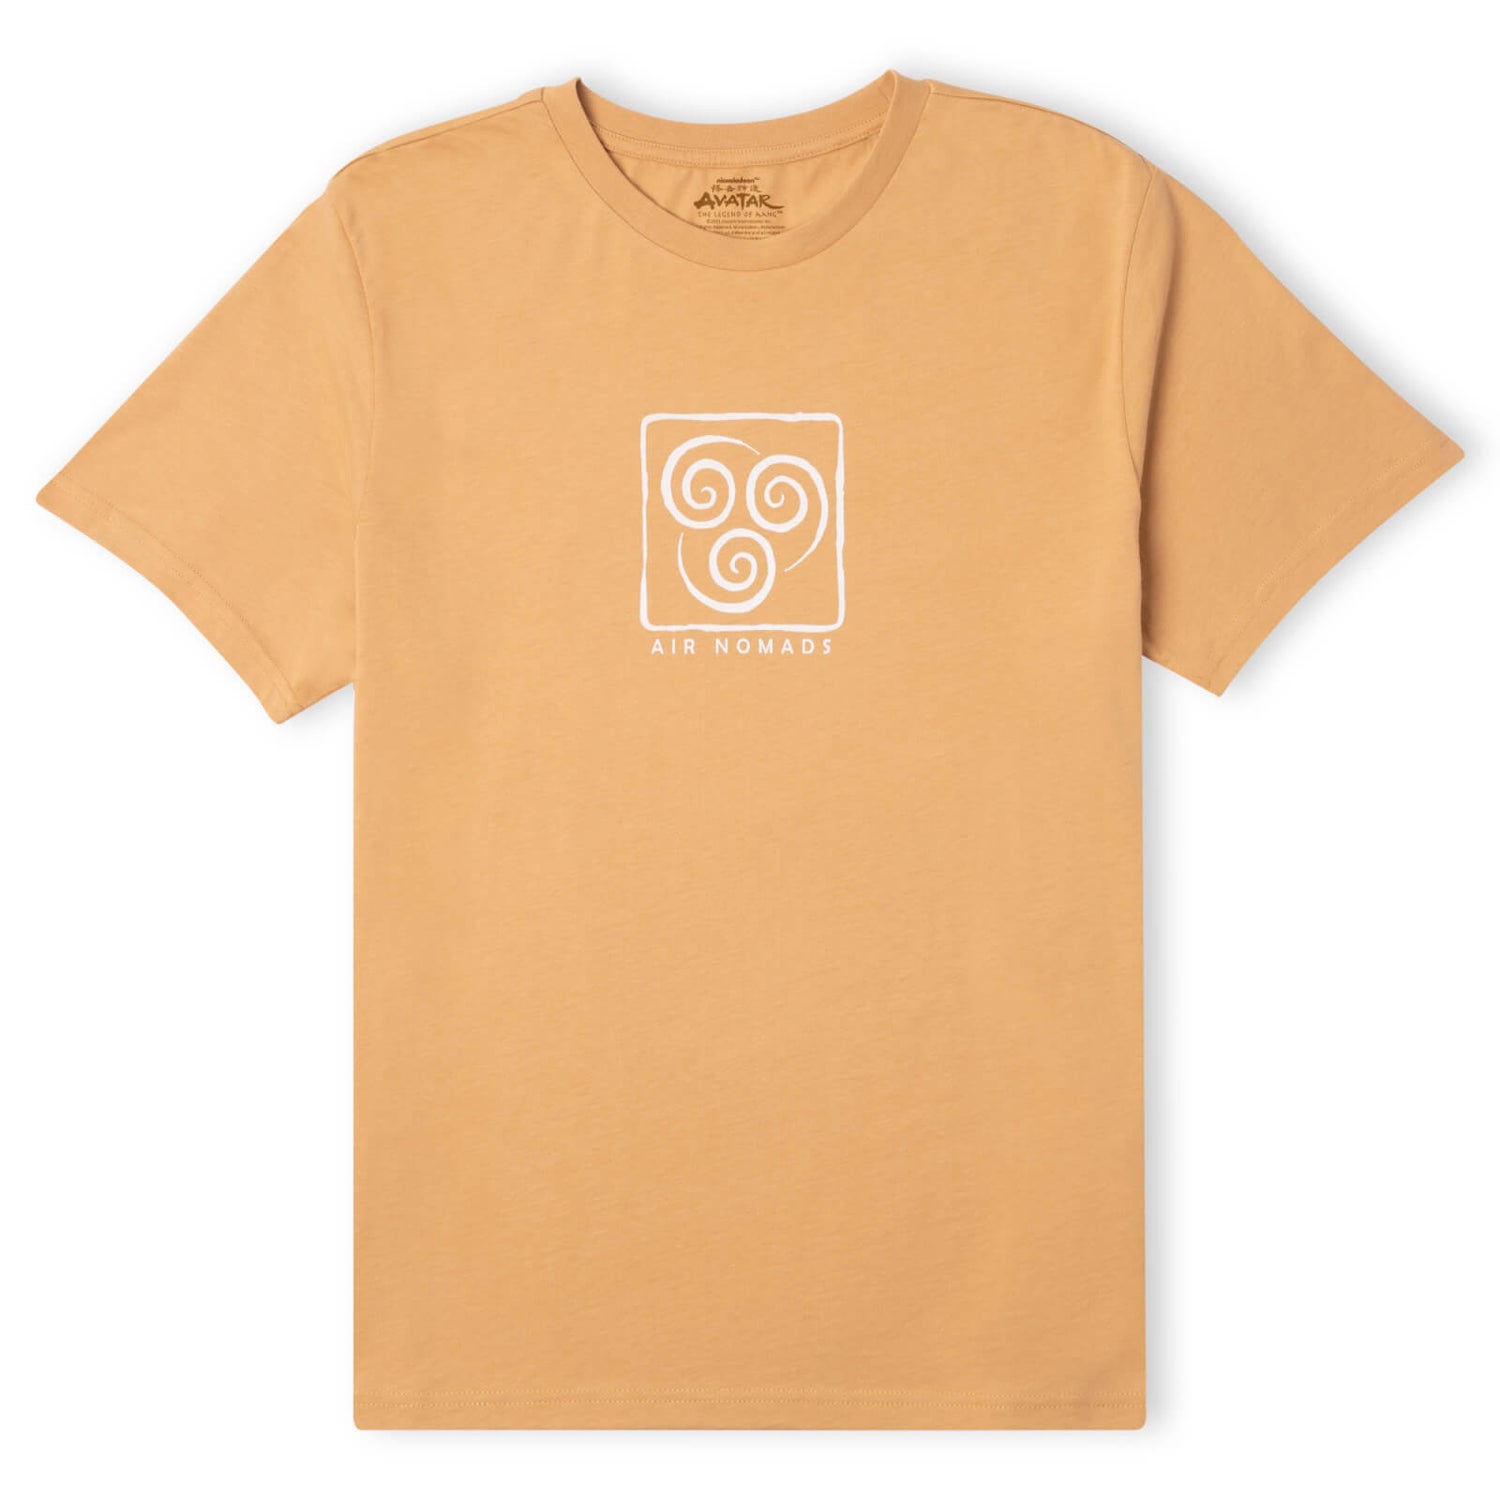 Avatar Air Nomads T-Shirt Unisexe - Ocre